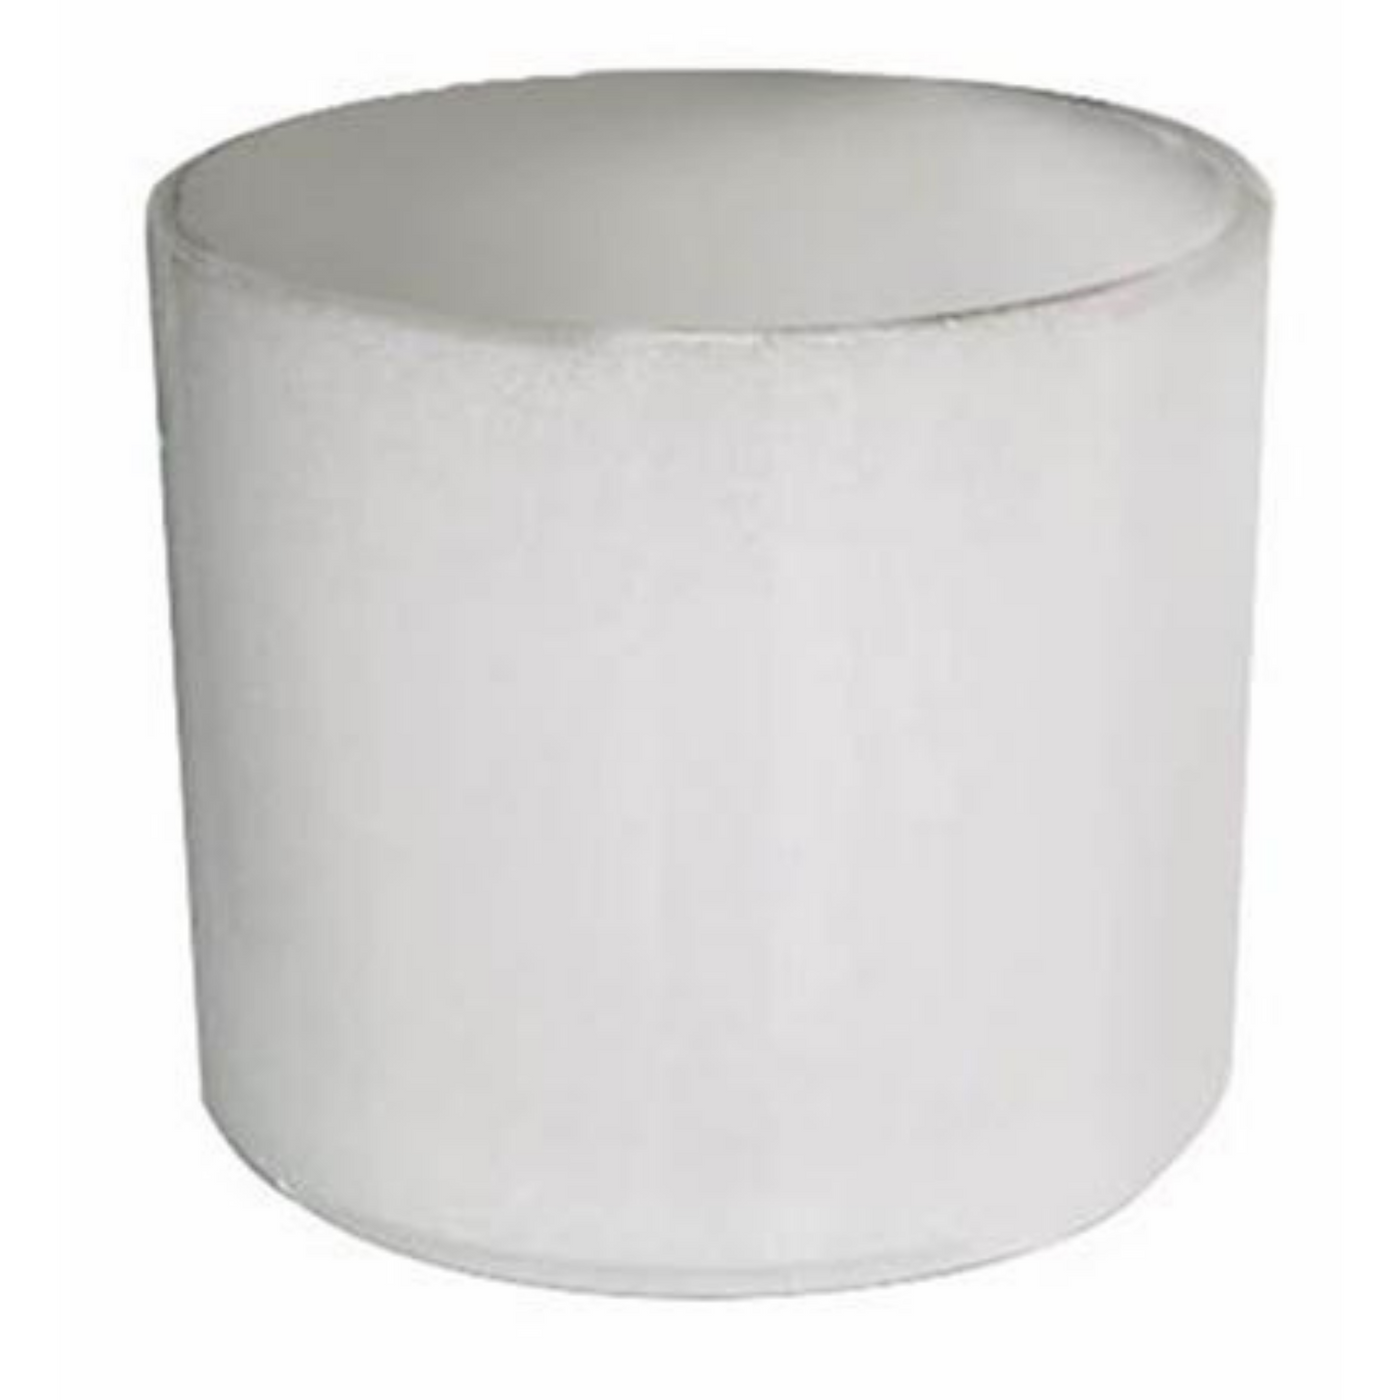 Pillar pot in matte white